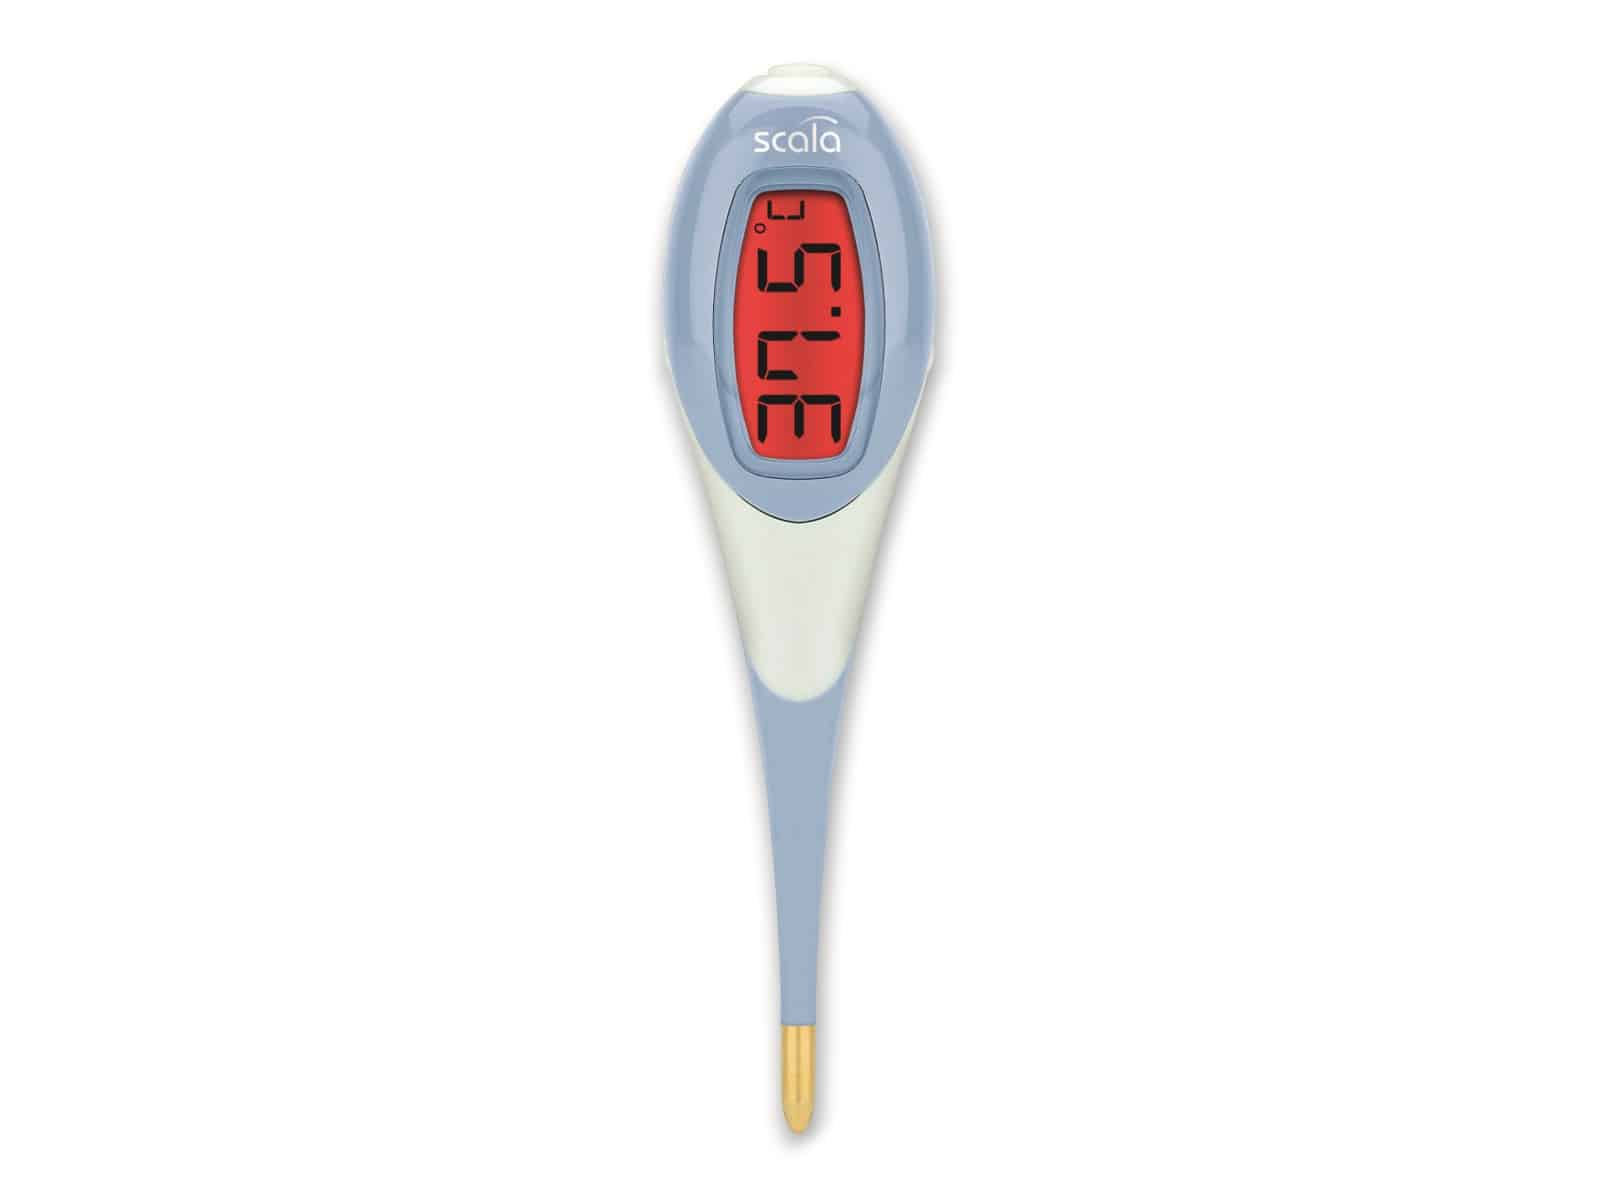 SCALA Fieberthermometer SC 2050, flex